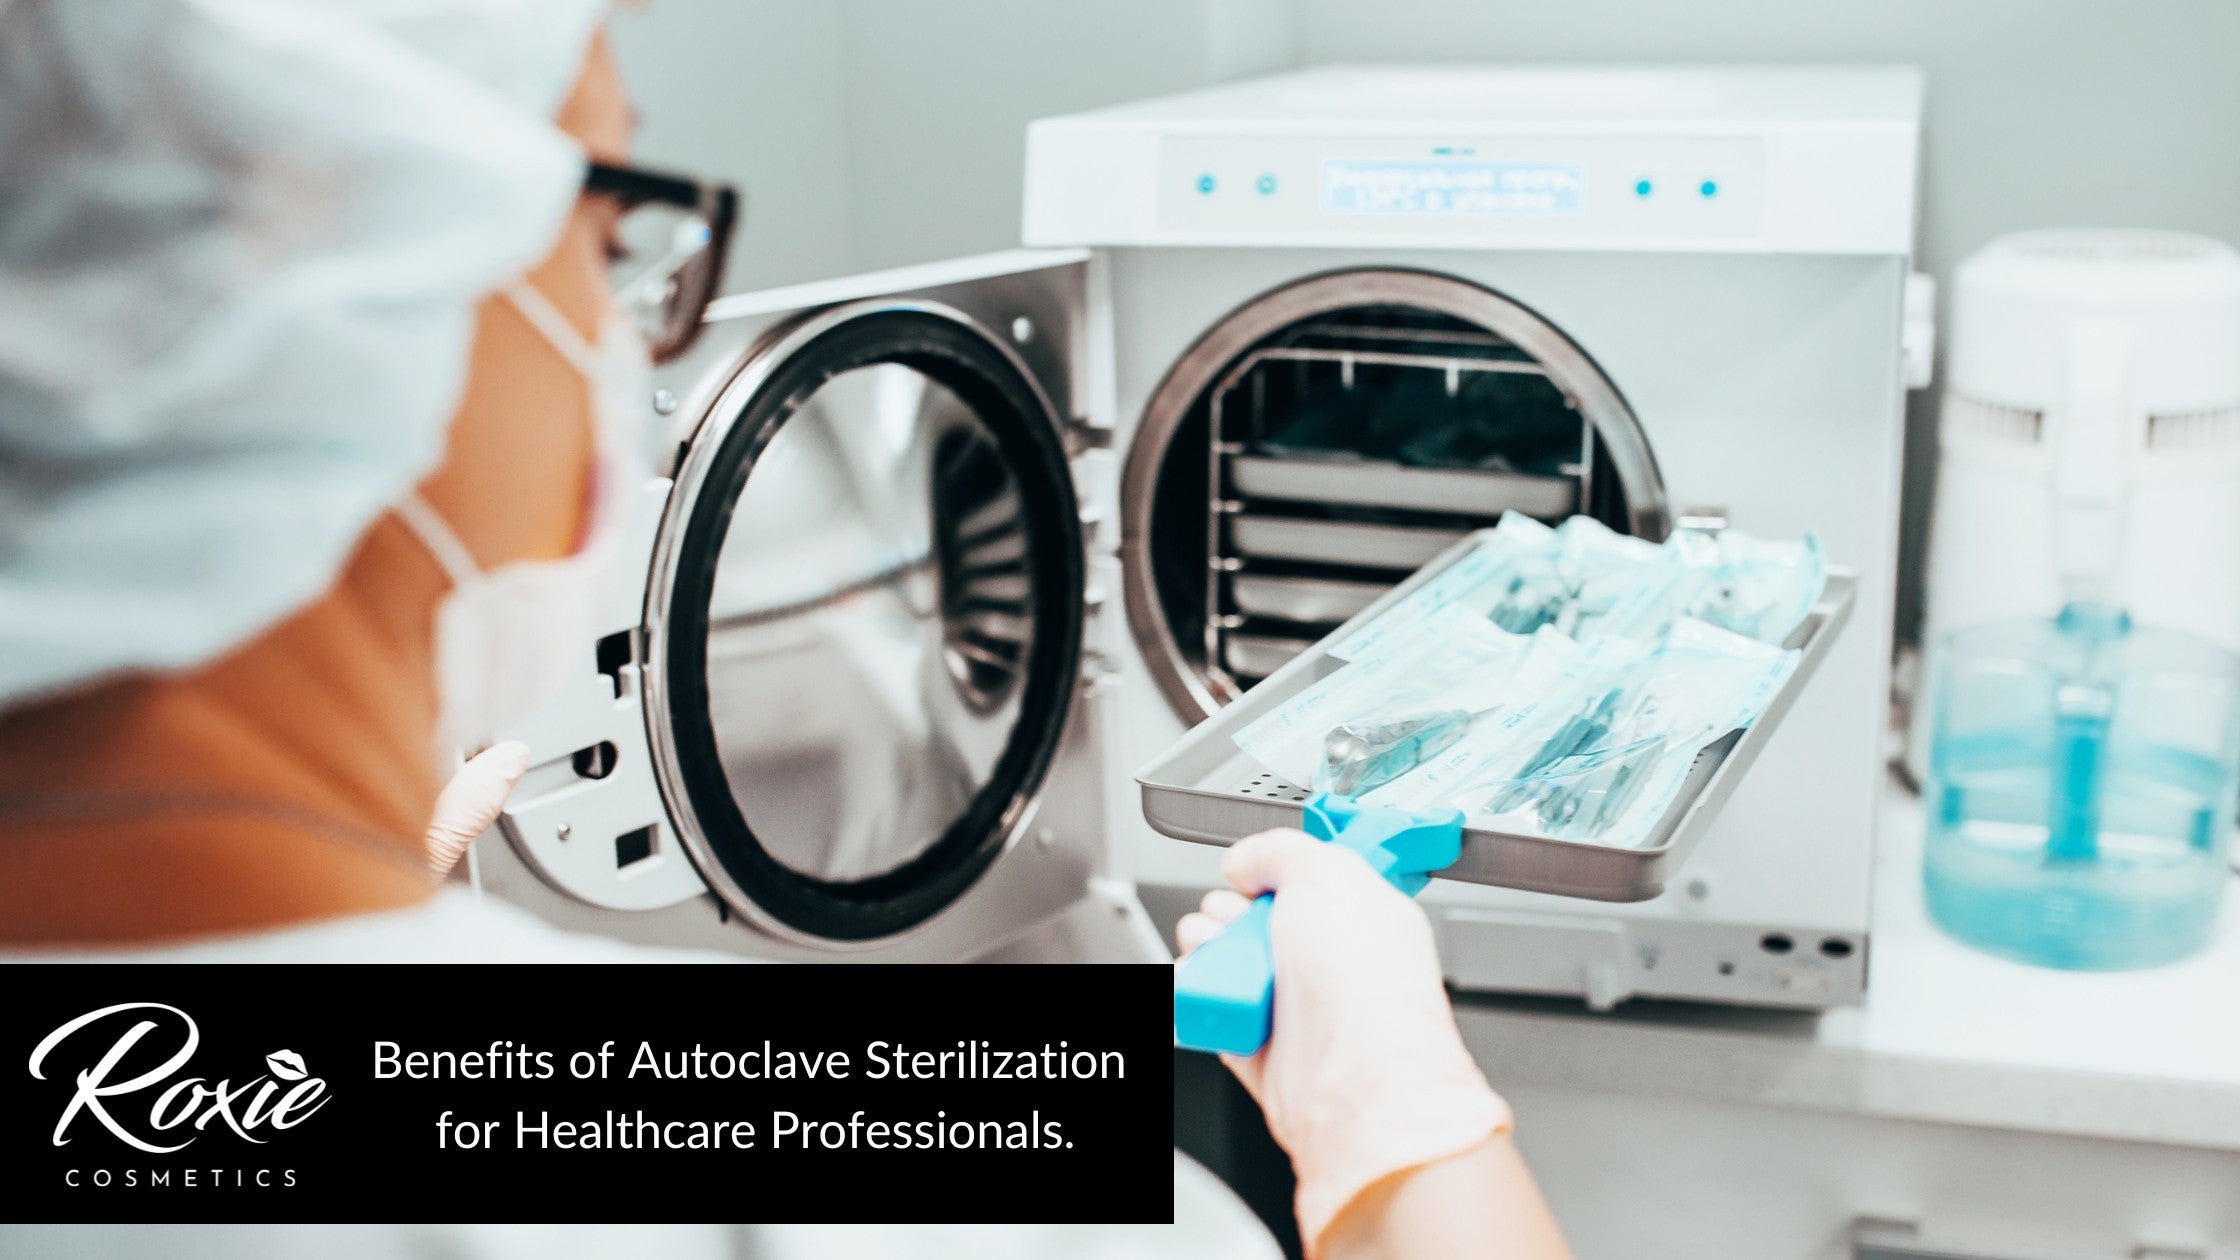 Introduction to Autoclave Sterilization Process